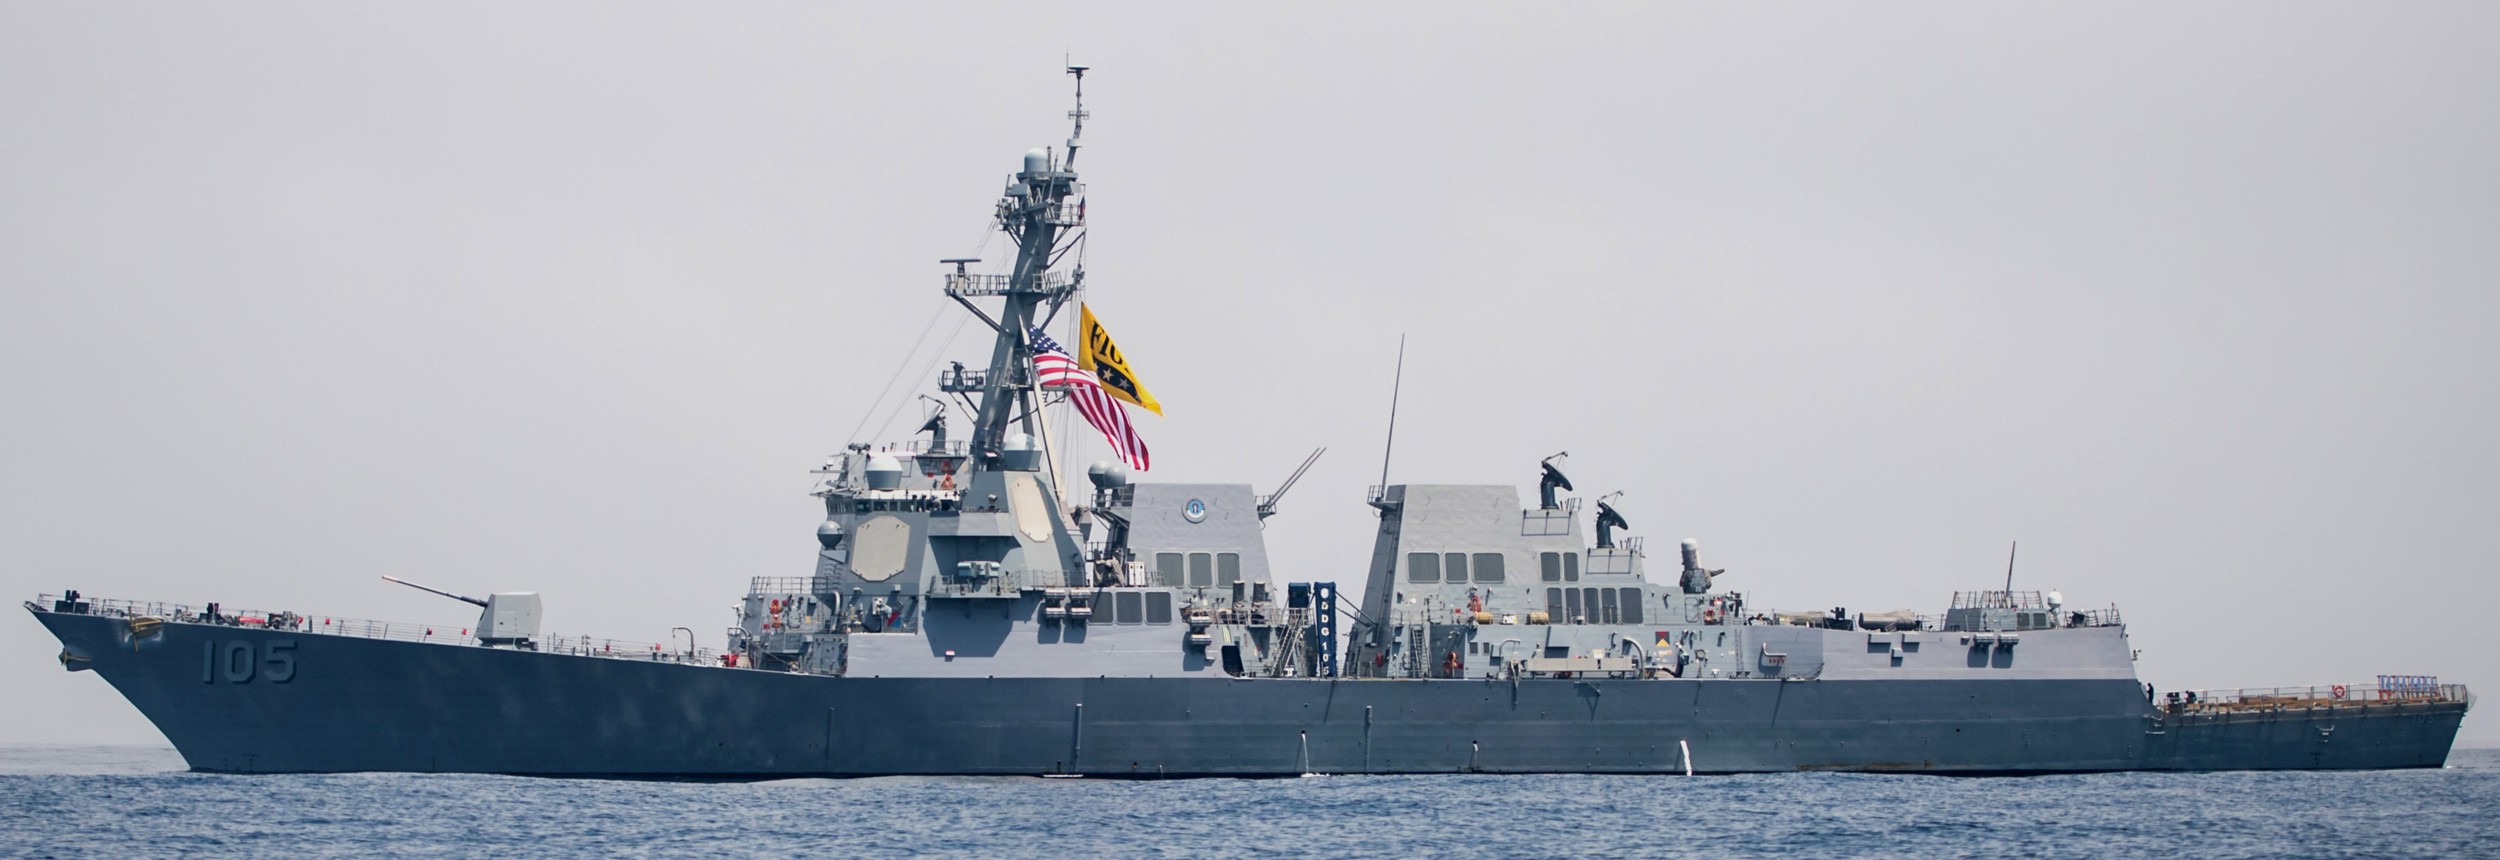 ddg-110 uss dewey arleigh burke class guided missile destroyer aegis us navy pacific ocean 106